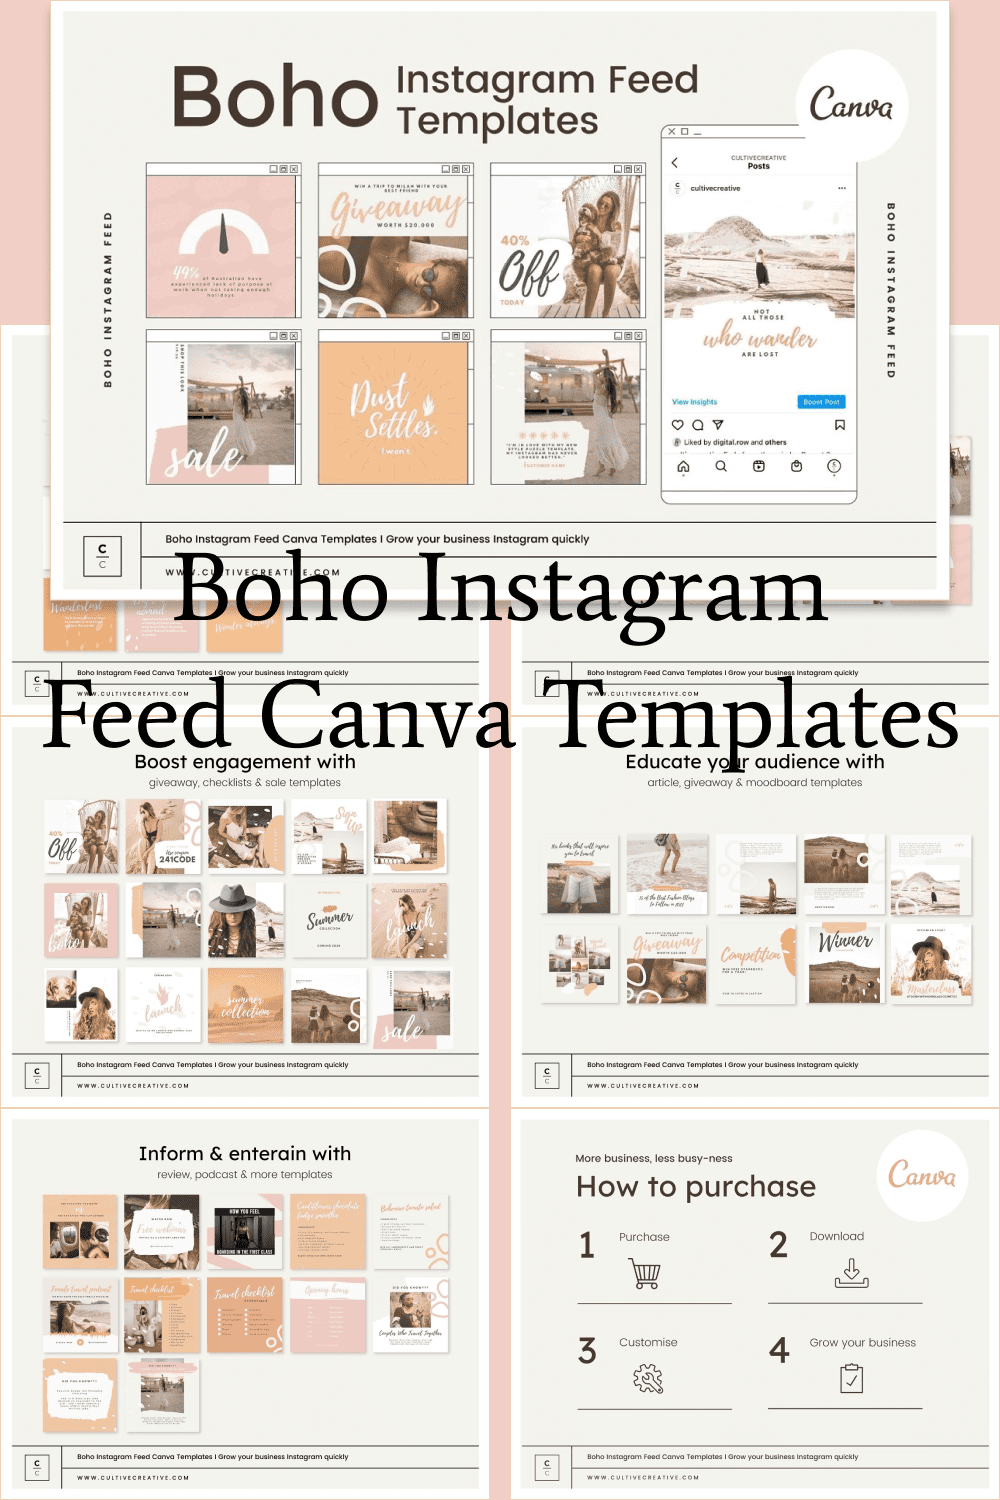 Boho Instagram Feed Canva Templates - Pinterest.